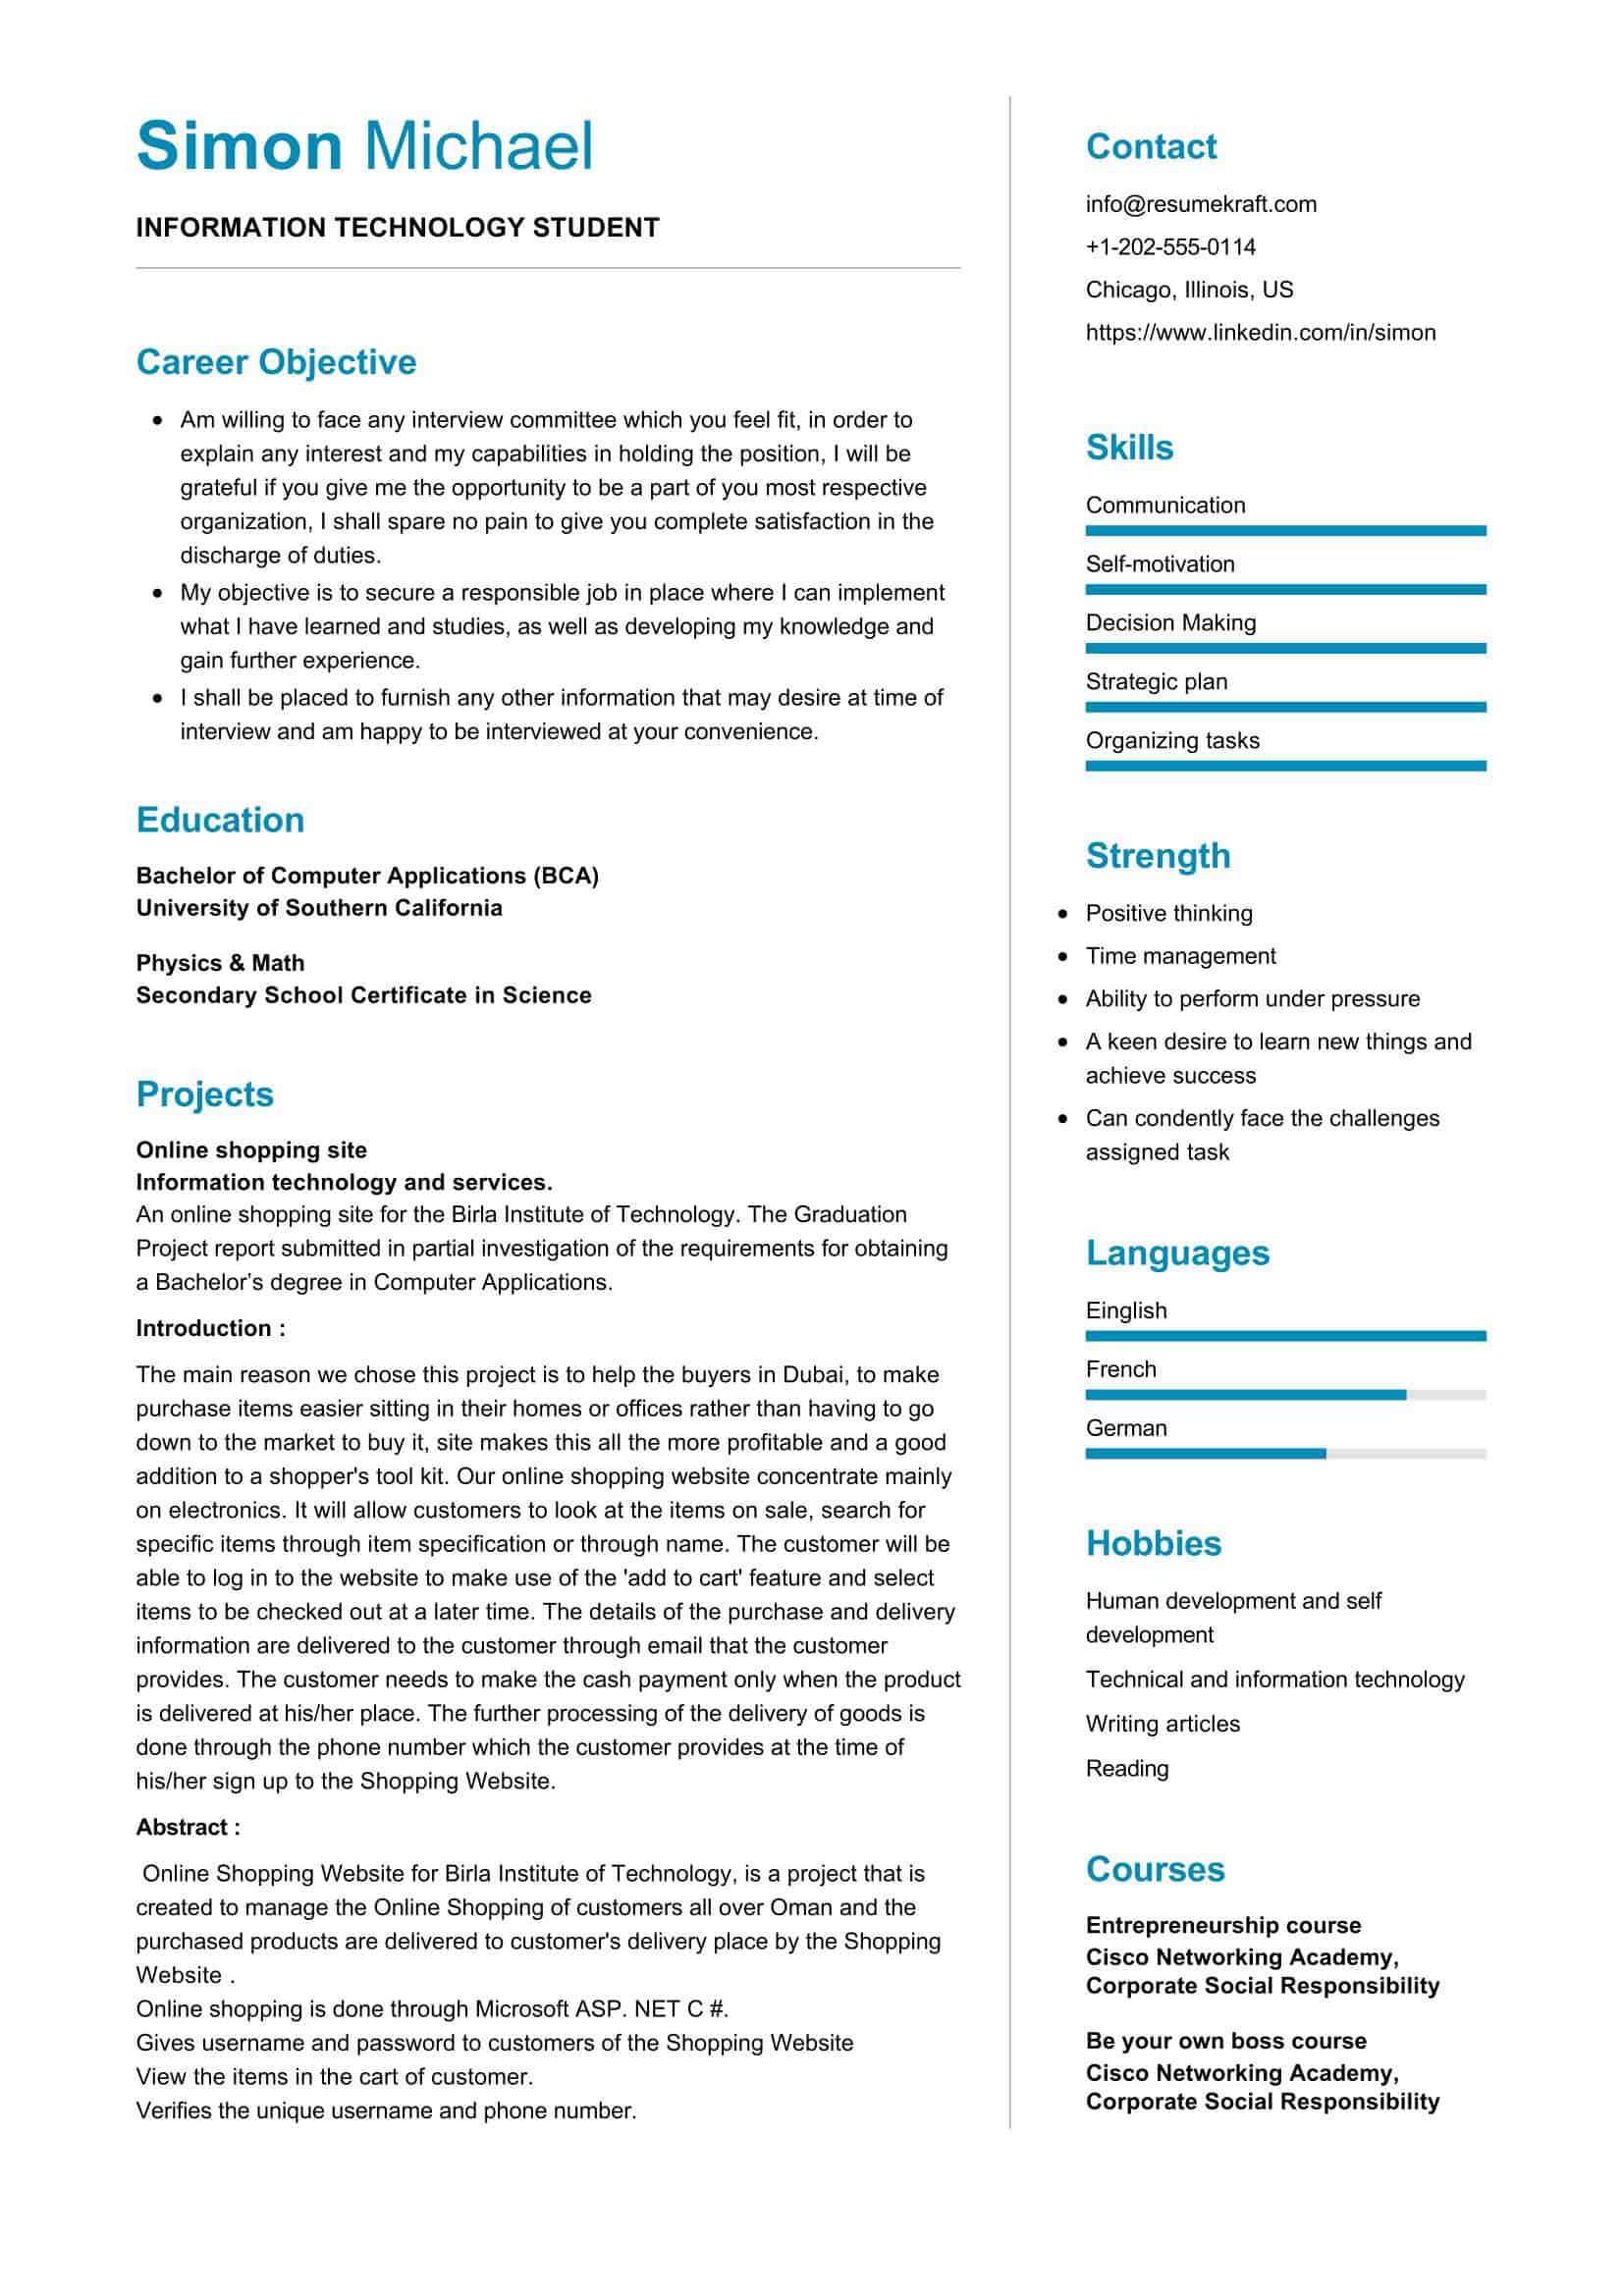 Information Technology Student Resume 2021 | Writing Tips - ResumeKraft